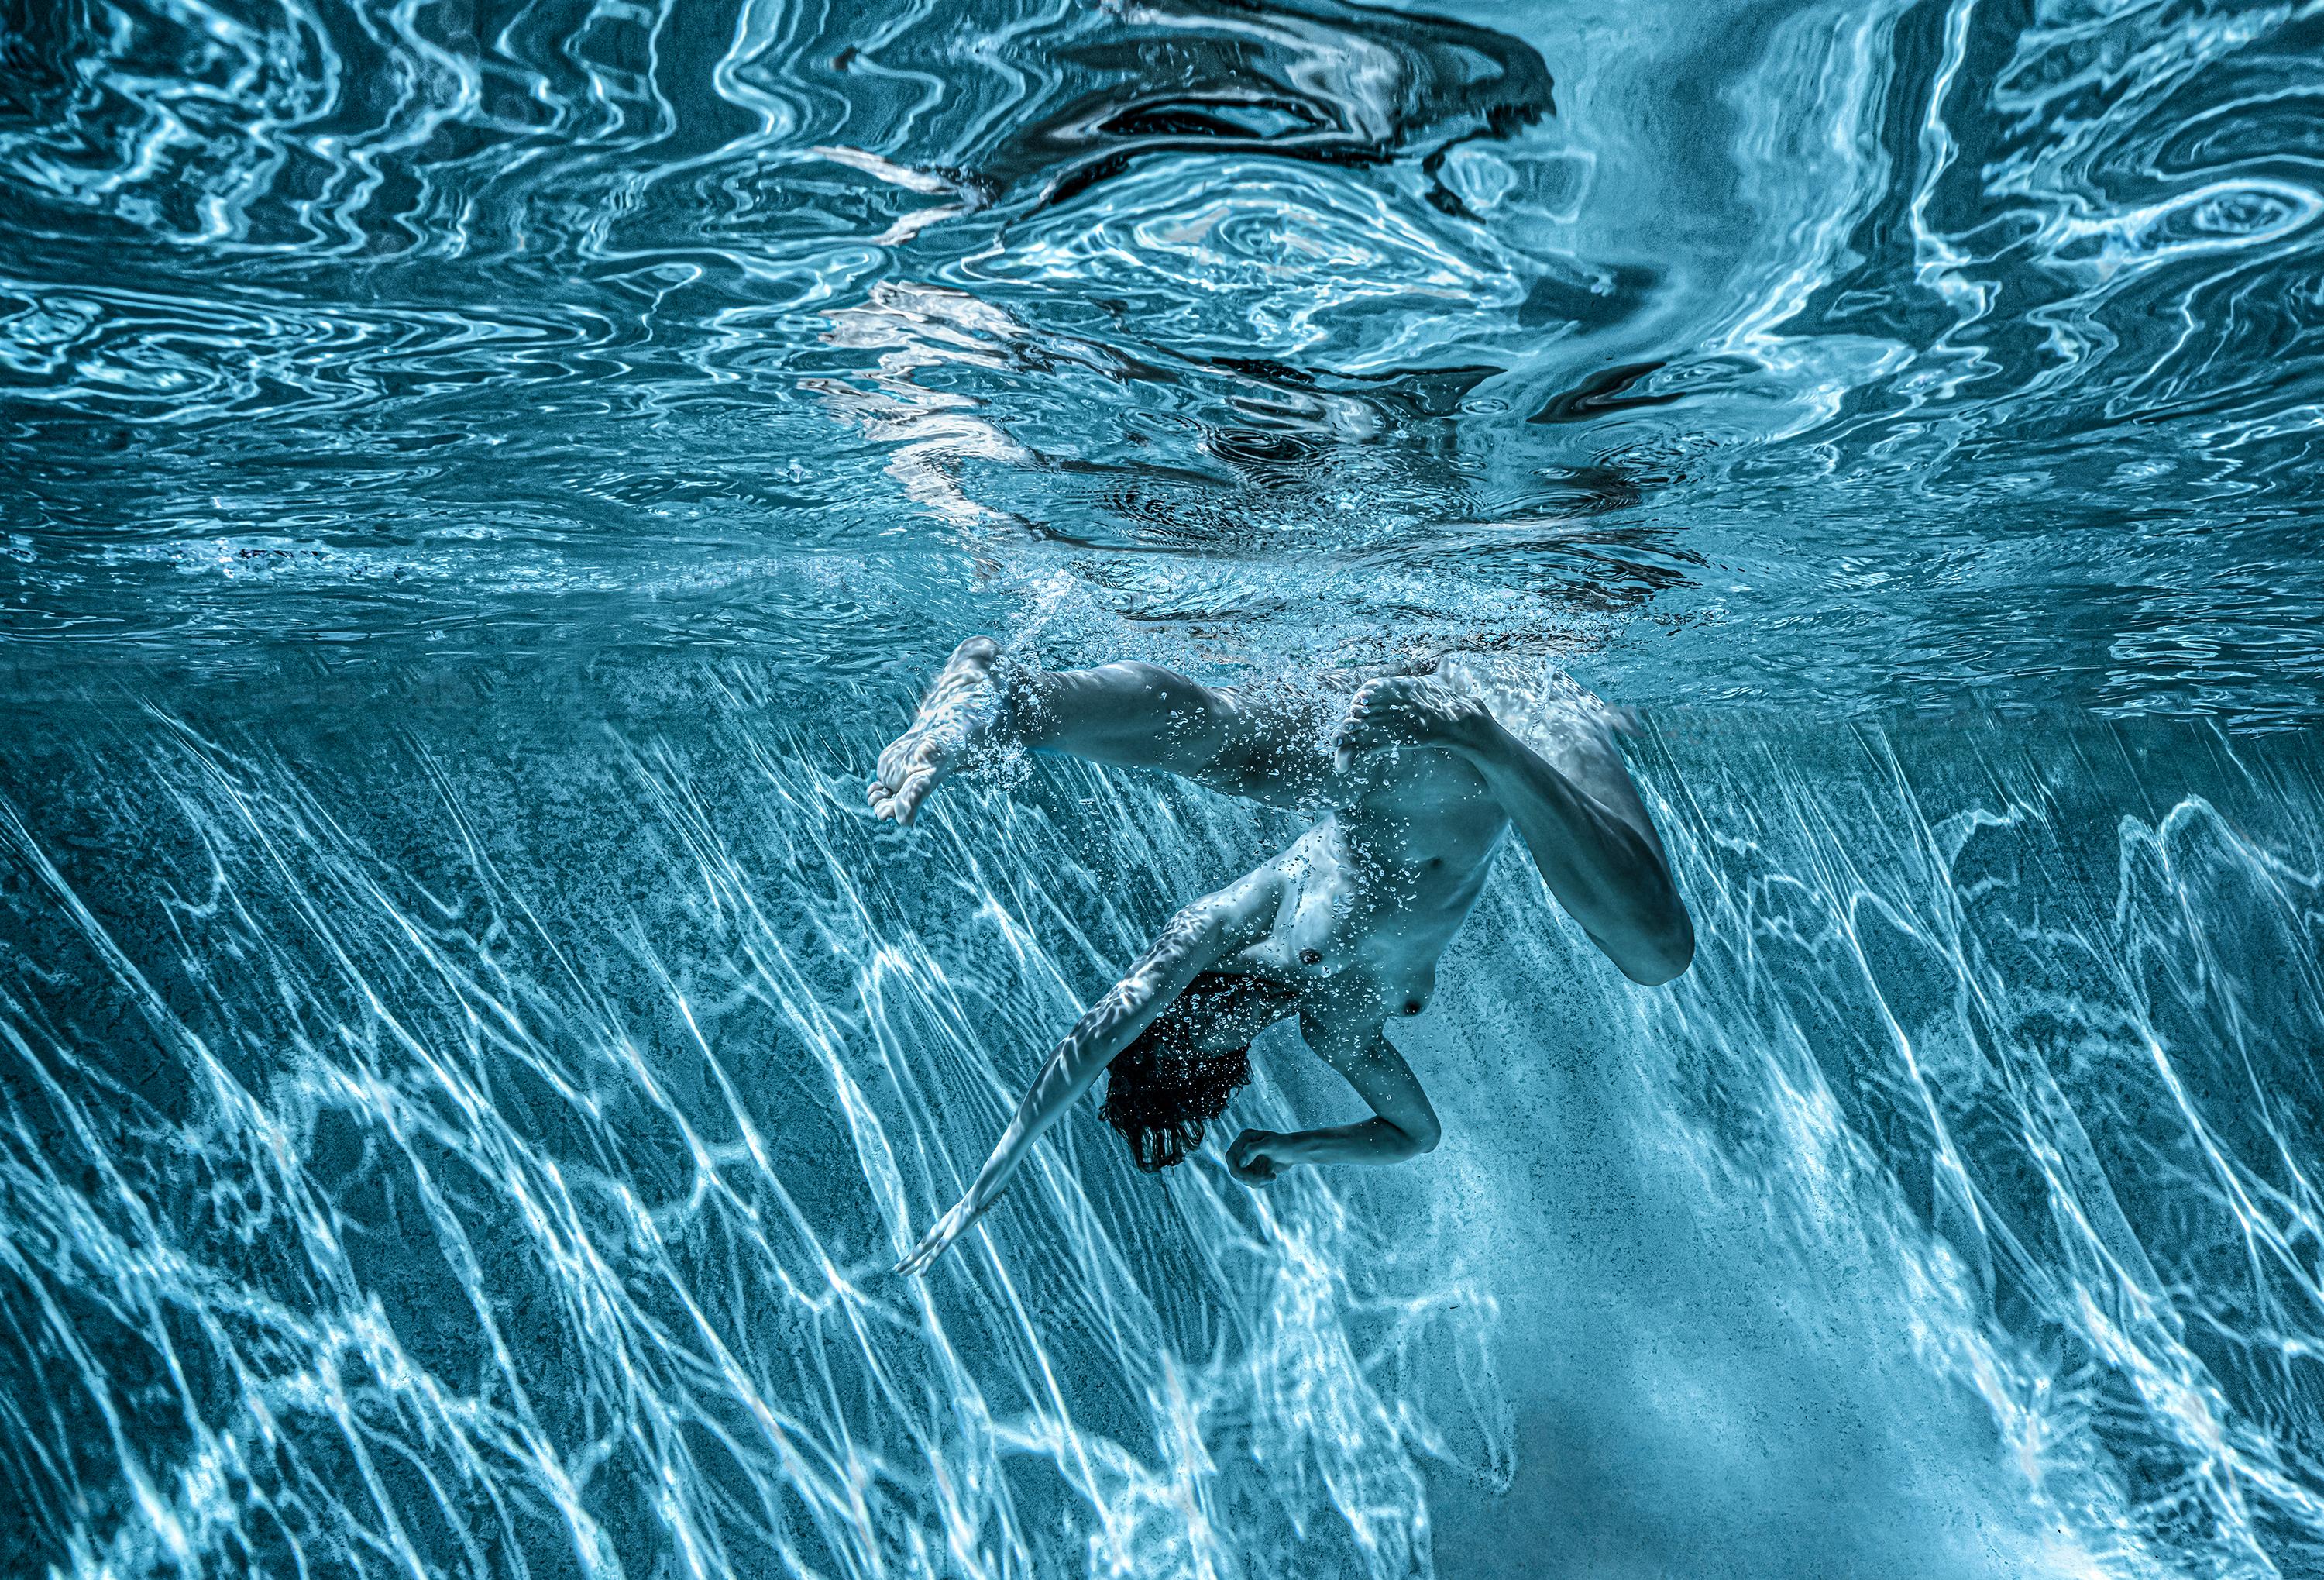 Alex Sher Figurative Photograph - Moonlight III - underwater nude photo - archival pigment print 24x35"